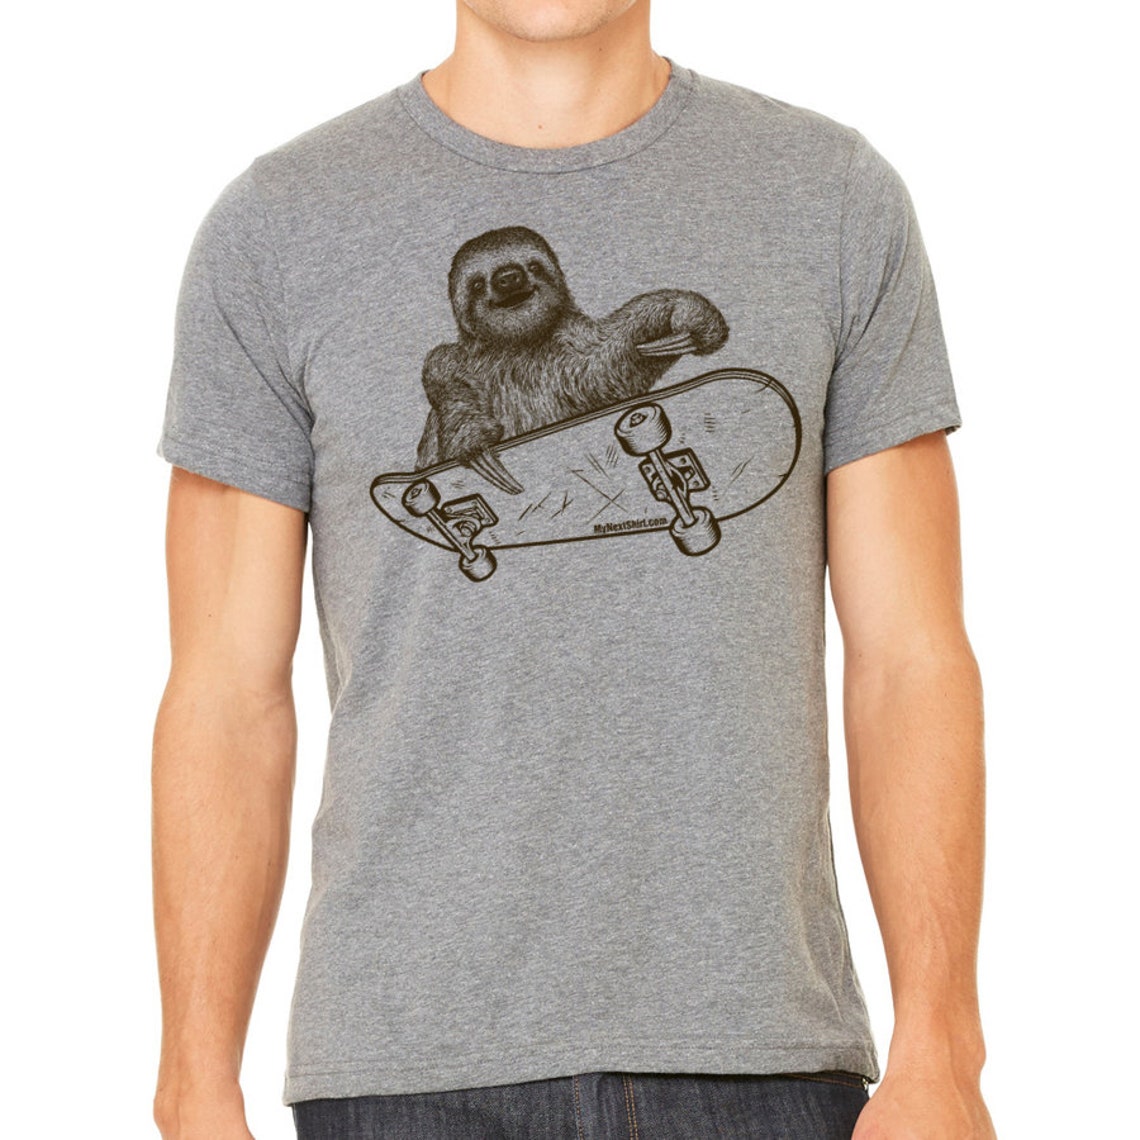 Sloth Riding A Skateboard Tshirt Funny Sloth Shirt for Men - Etsy